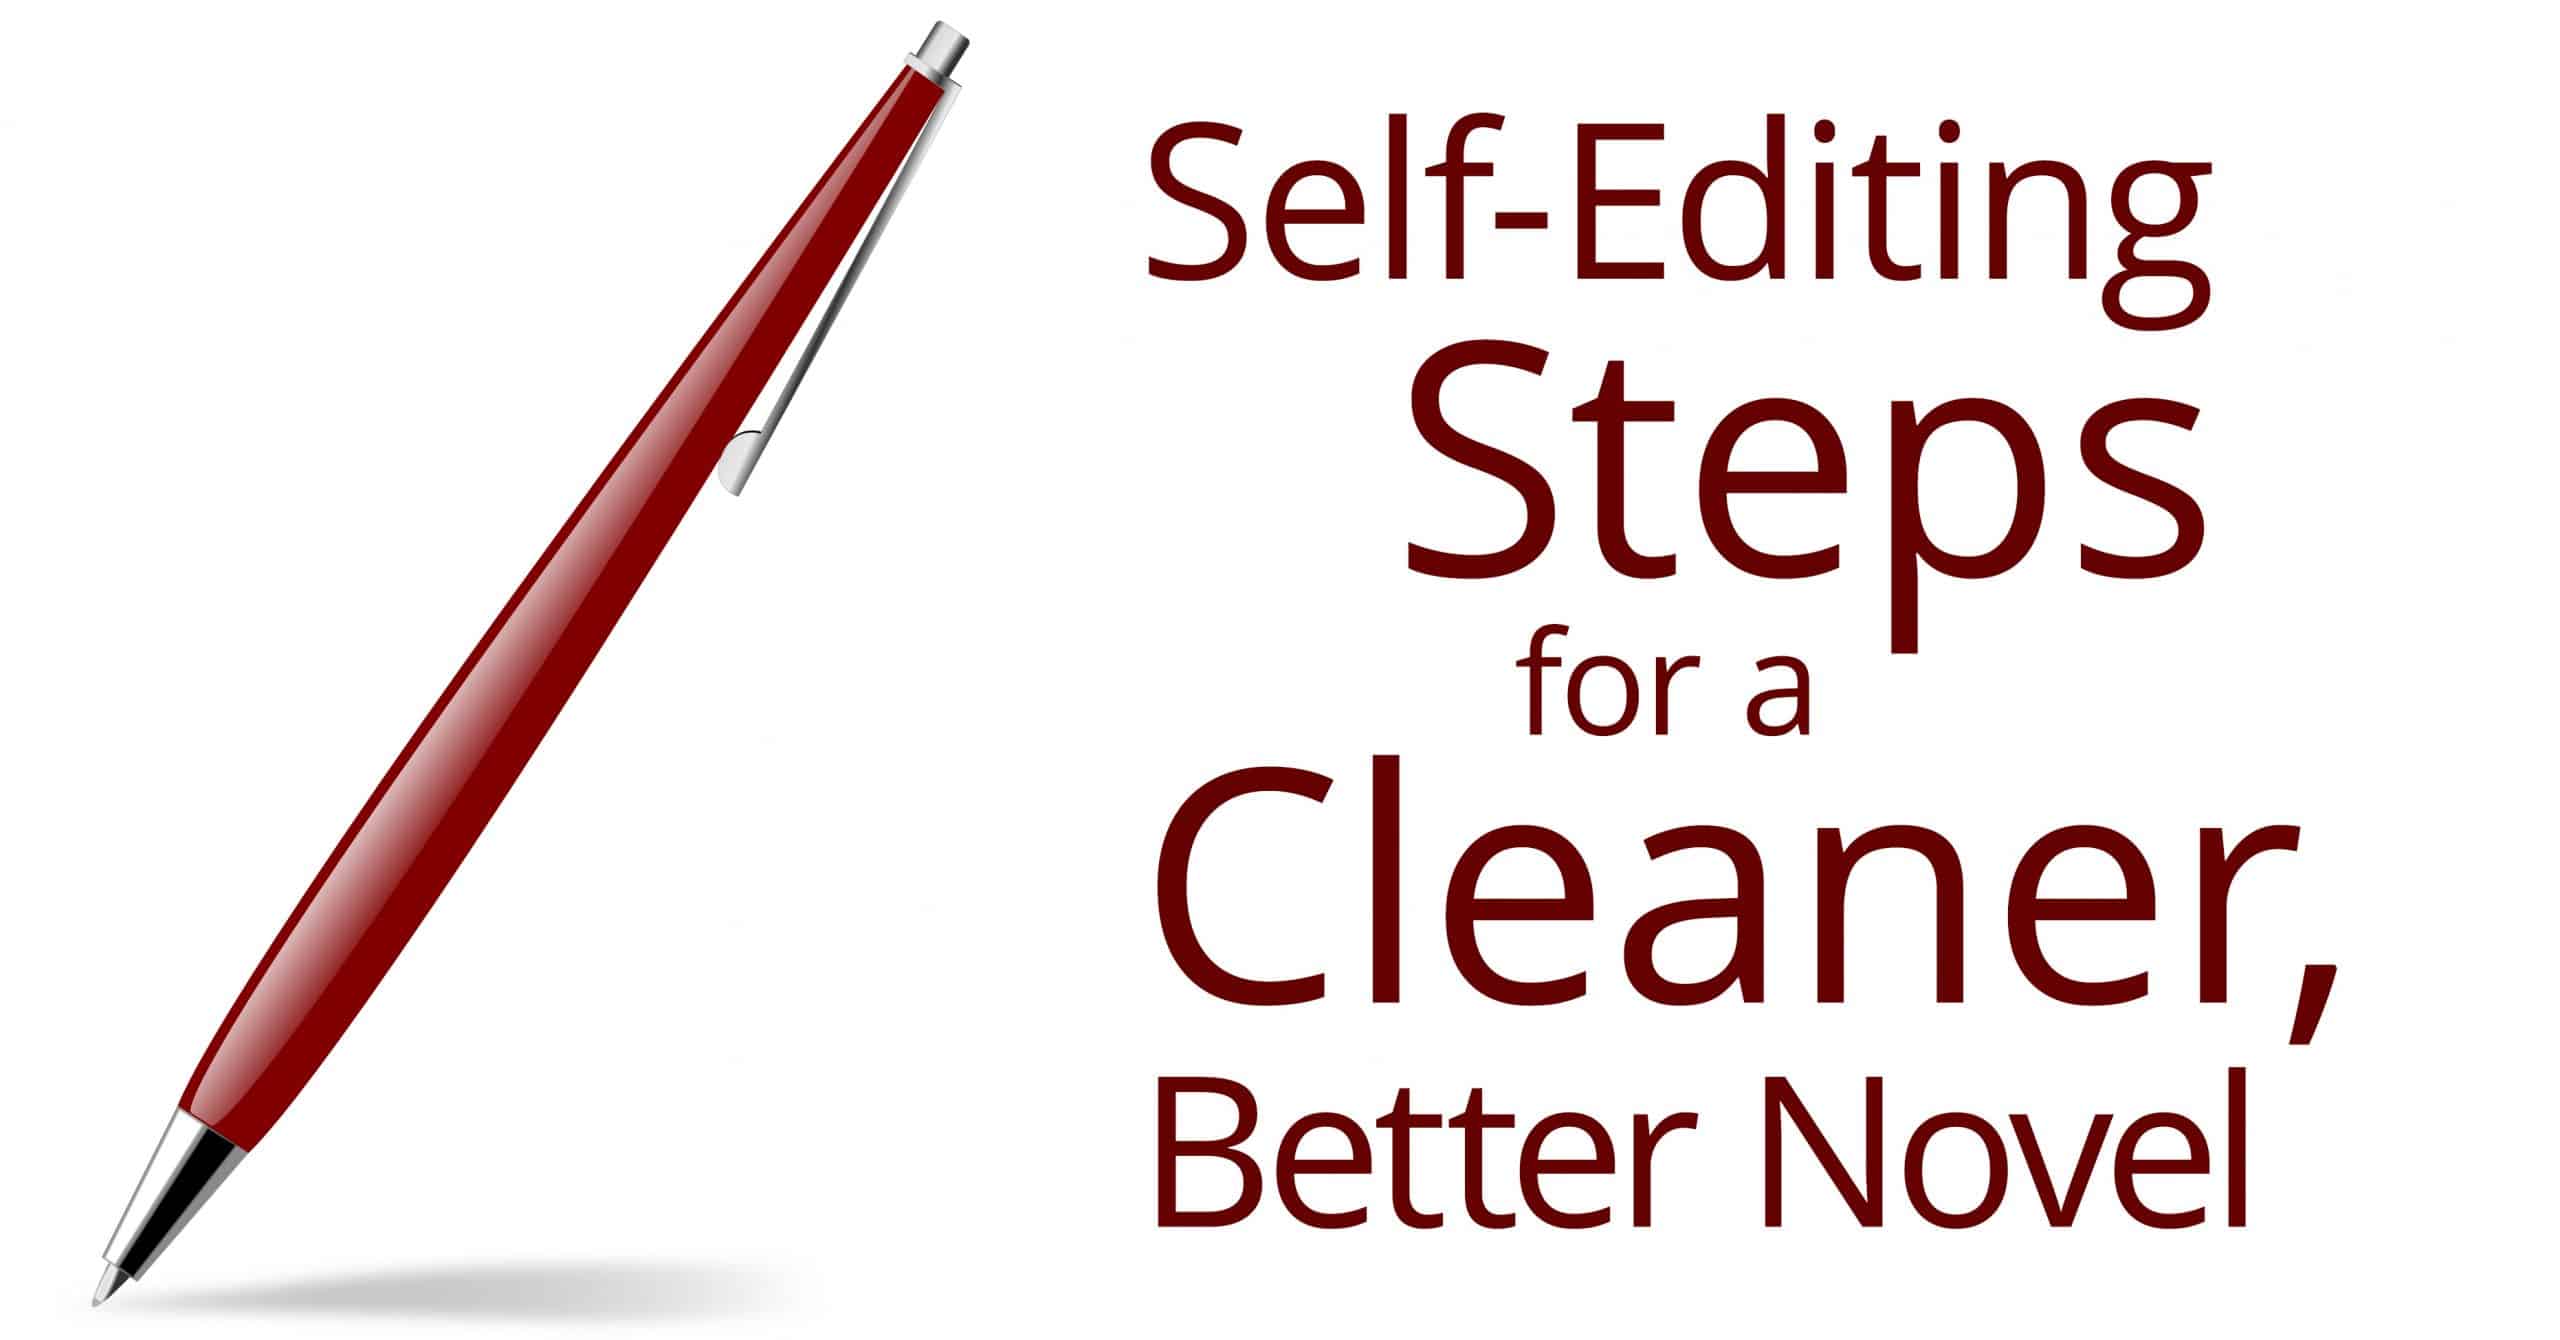 self-editing steps for a cleaner better novel